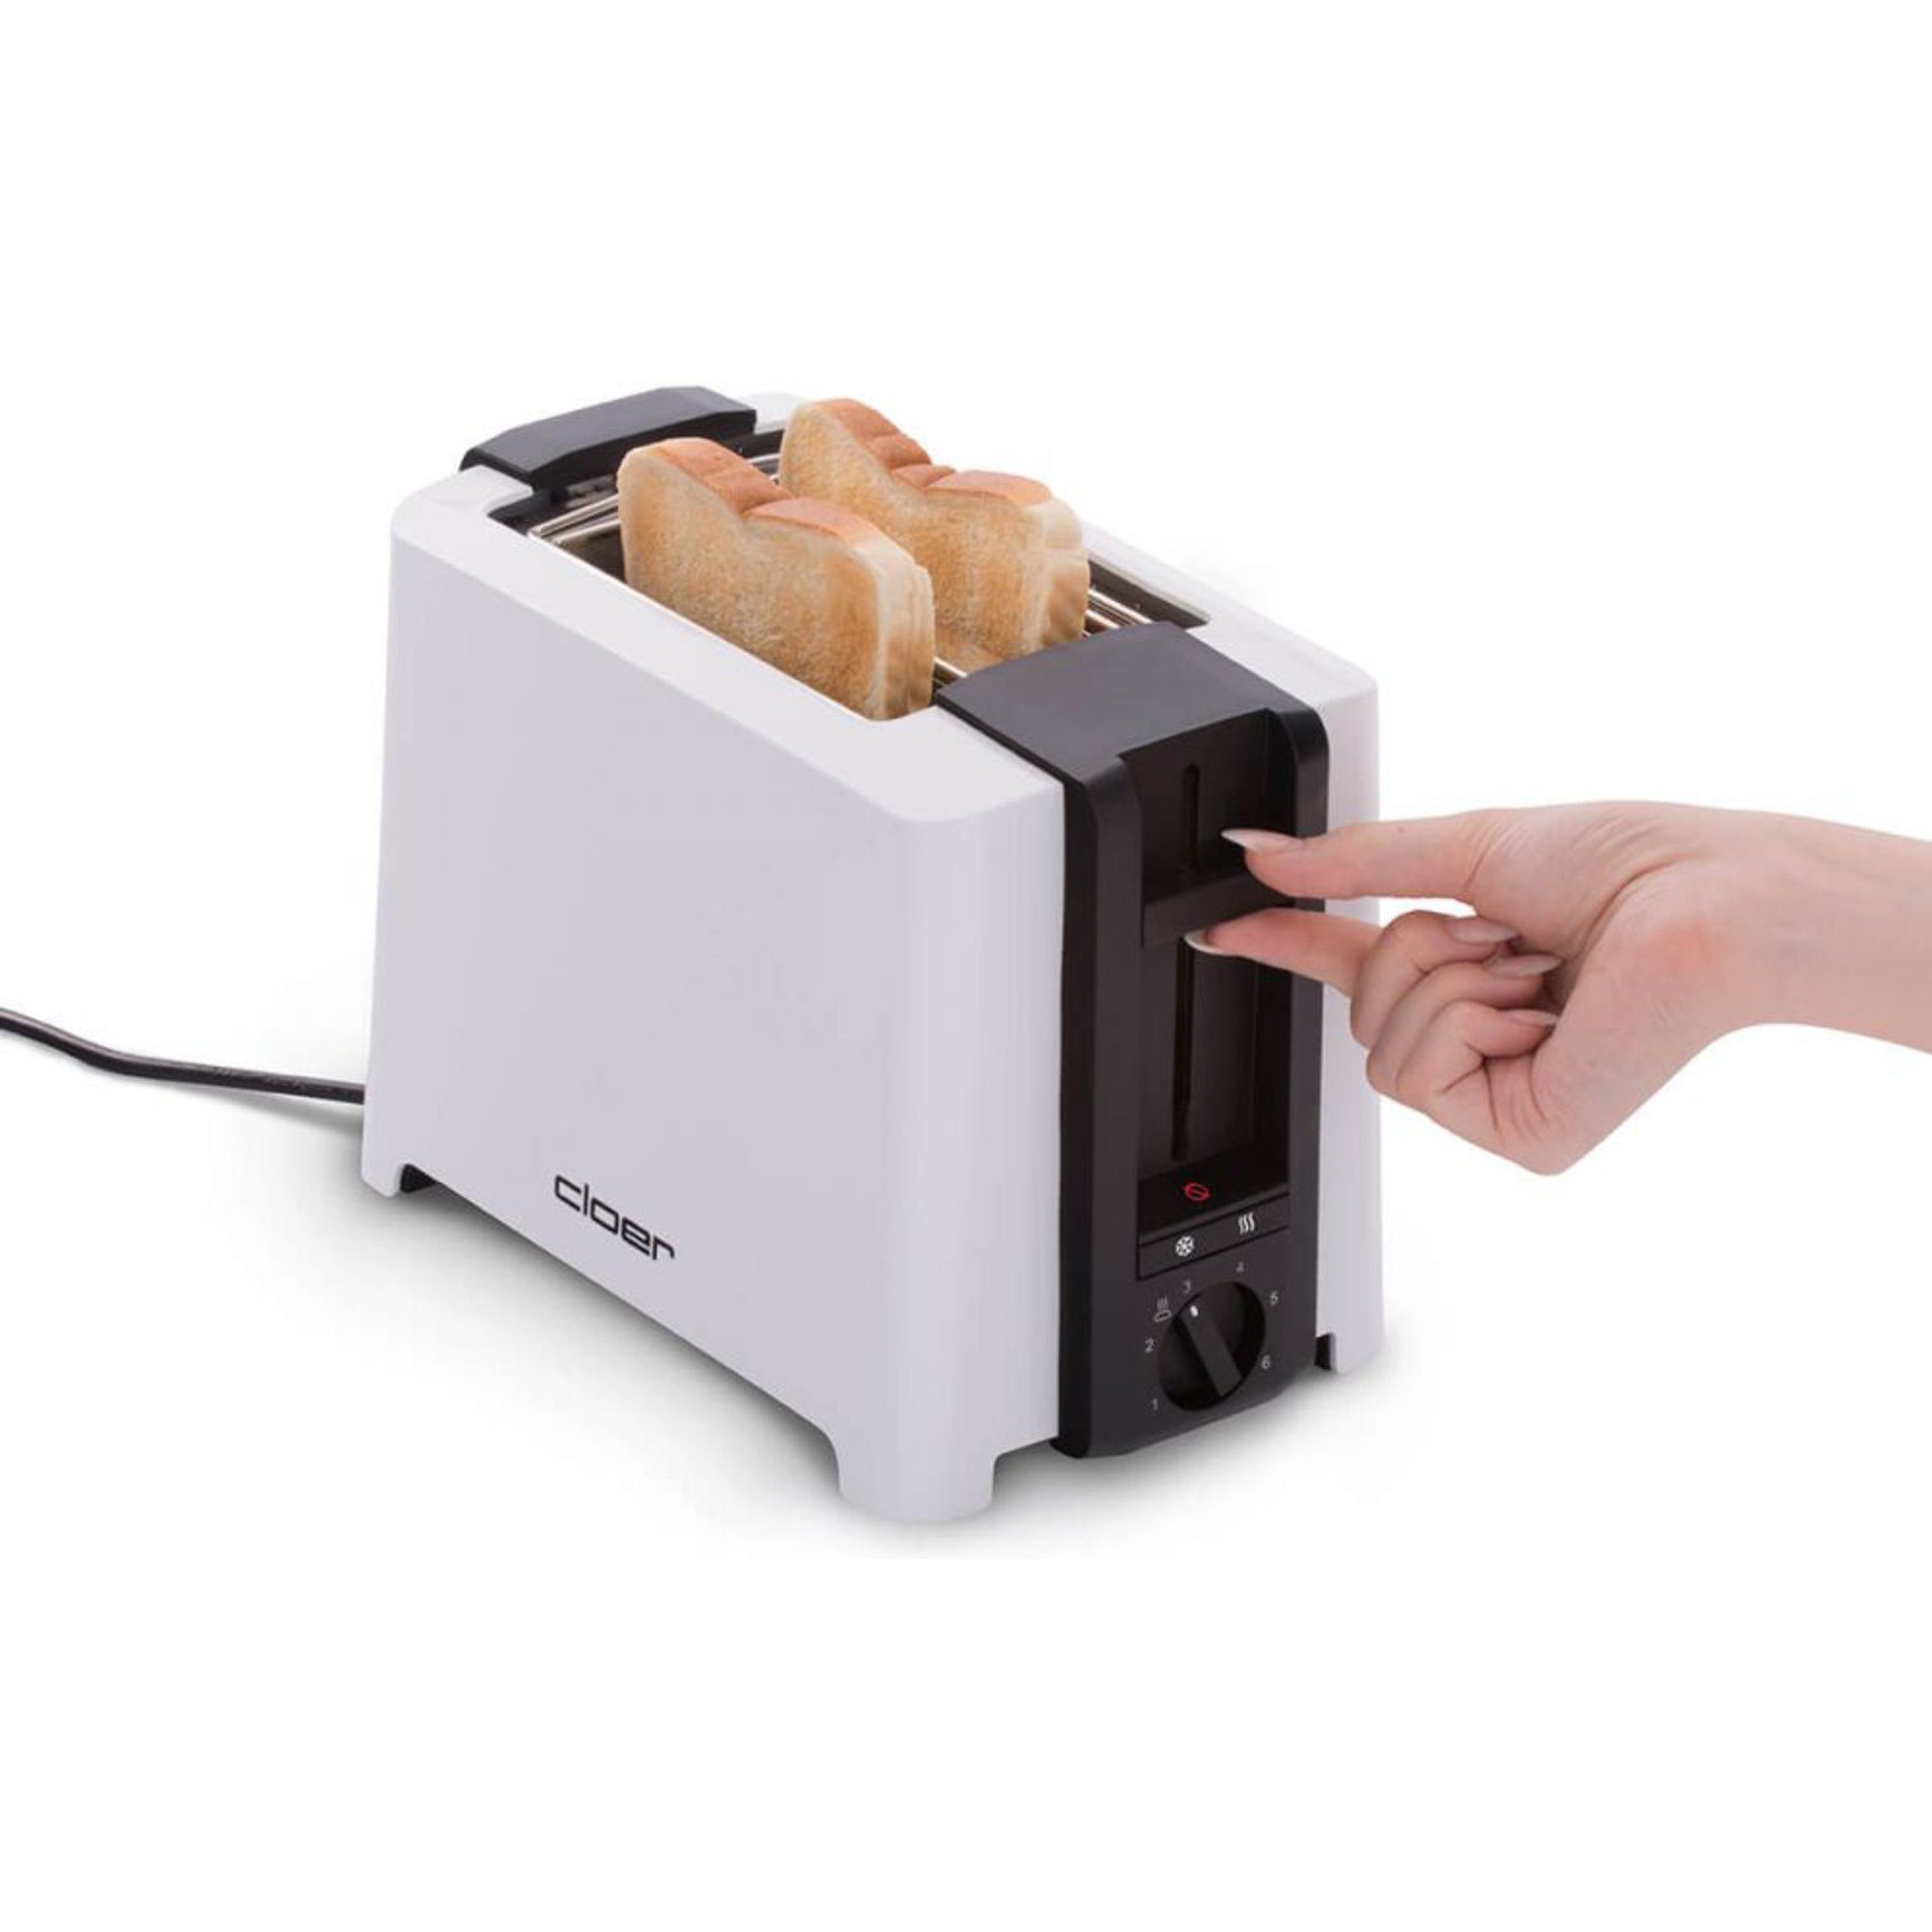 Watt, 3531, Size Kaffeebereiter Cloer für Cloer Full Toaster 2 (900